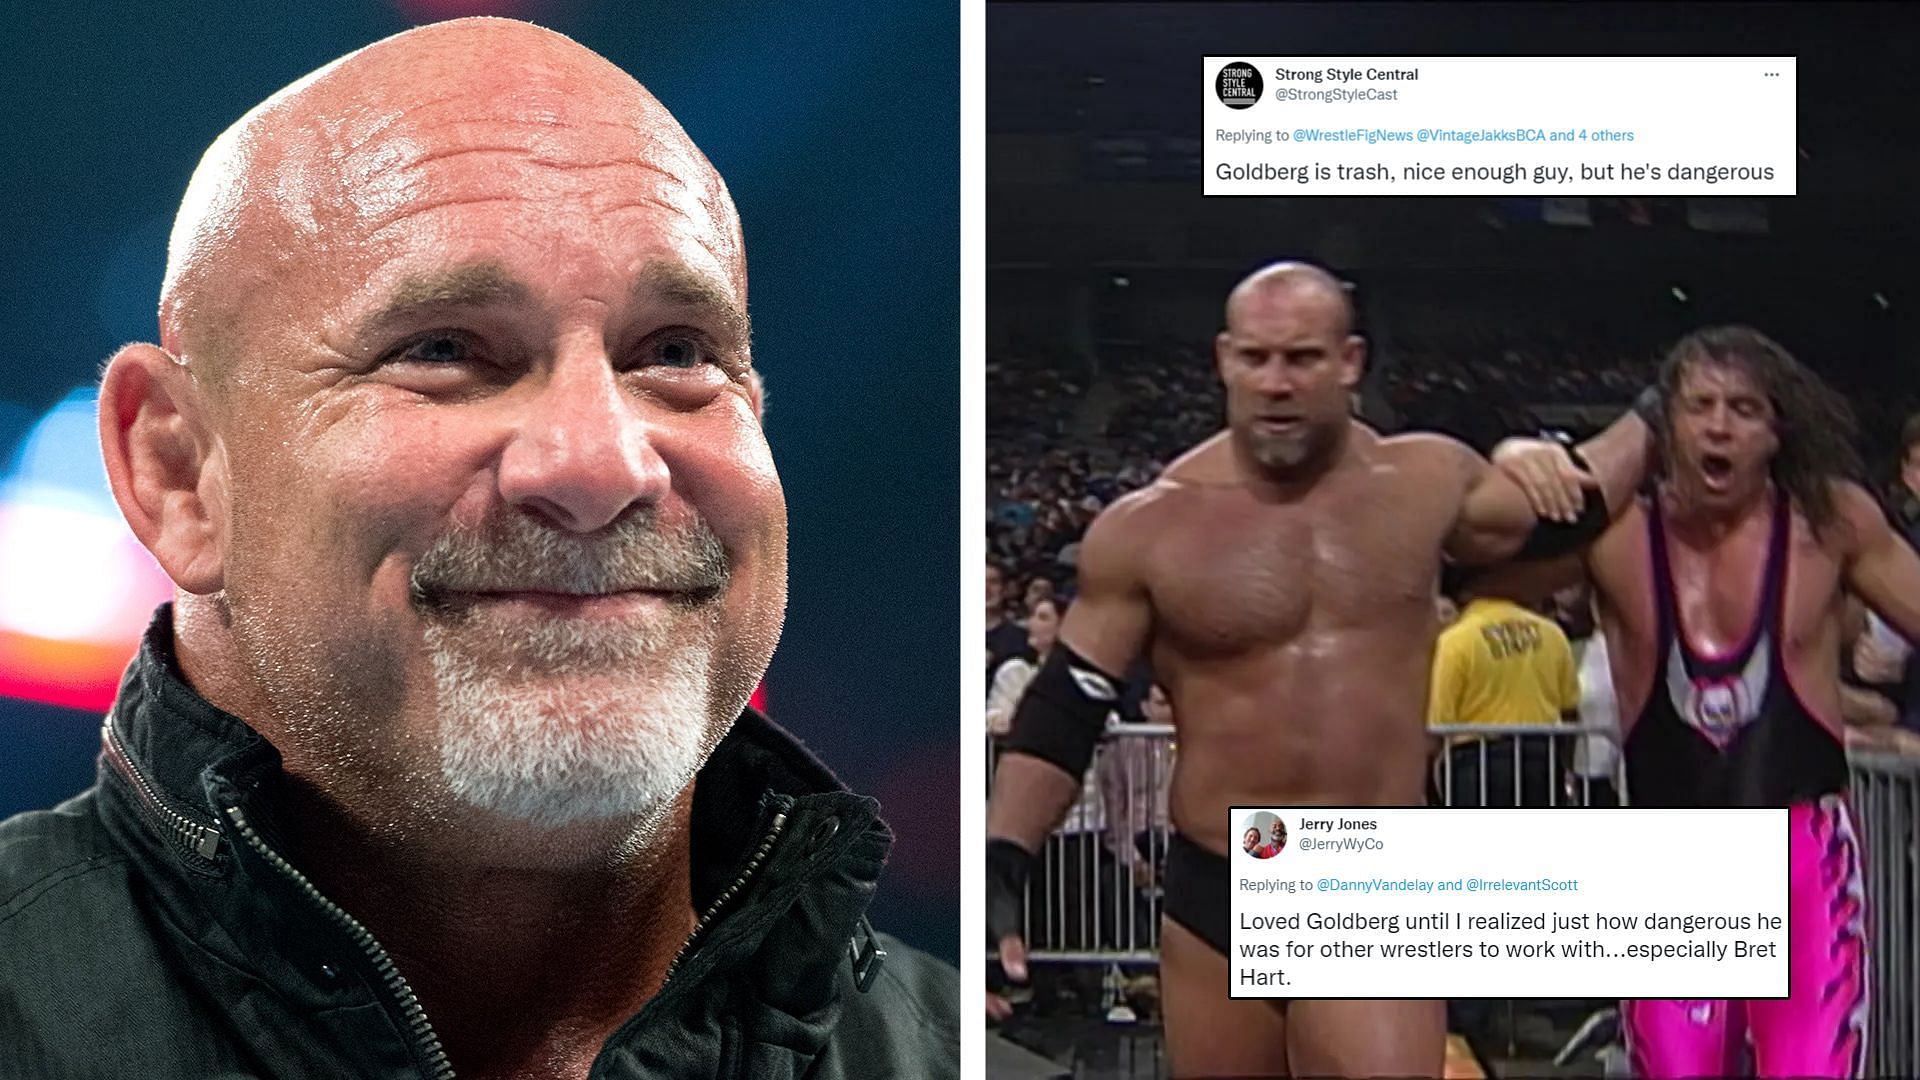 Twitter users often criticize WWE Hall of Famer Goldberg